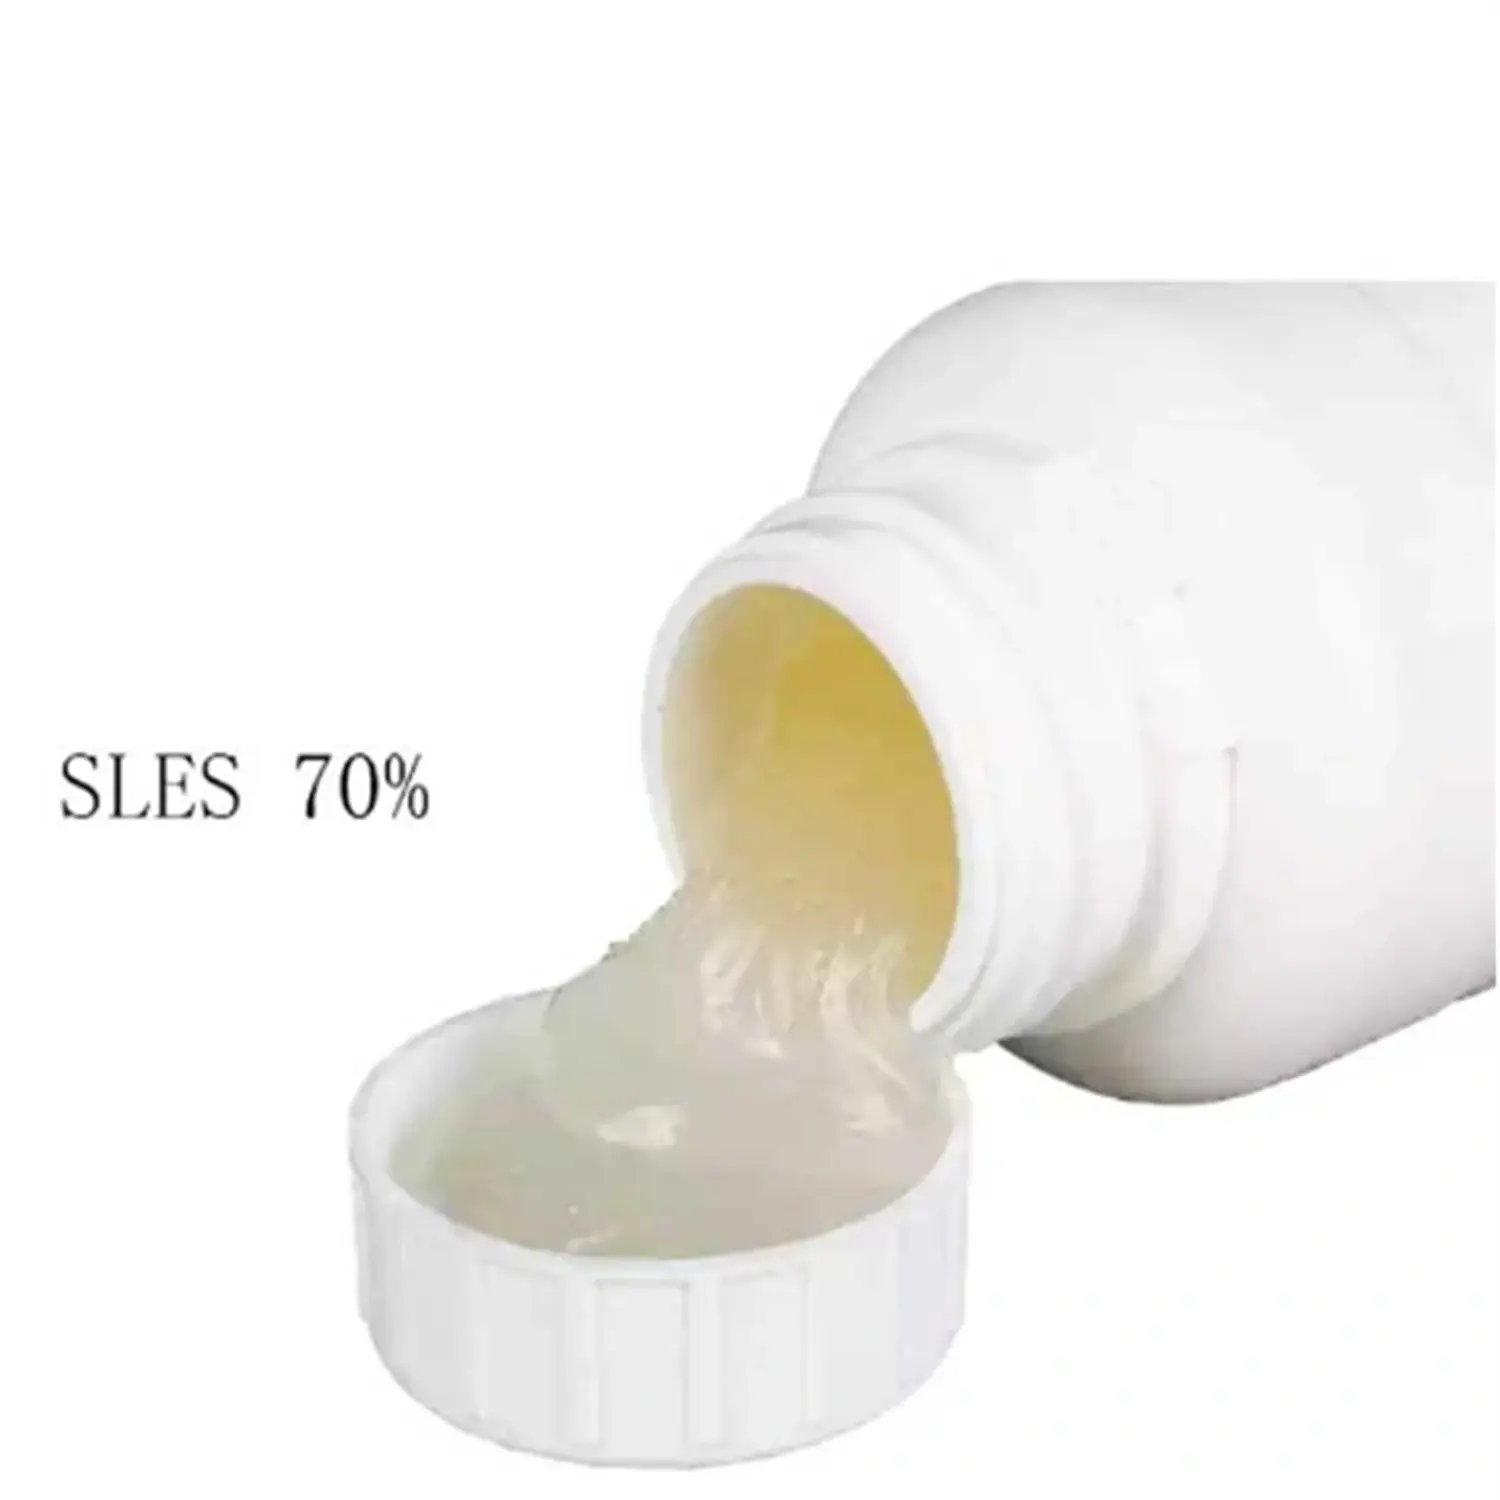 Bahan baku kimia untuk kosmetik/pencuci piring cair/sabun/sampo/deterjen CAS 68585-34-2 SLES 70%